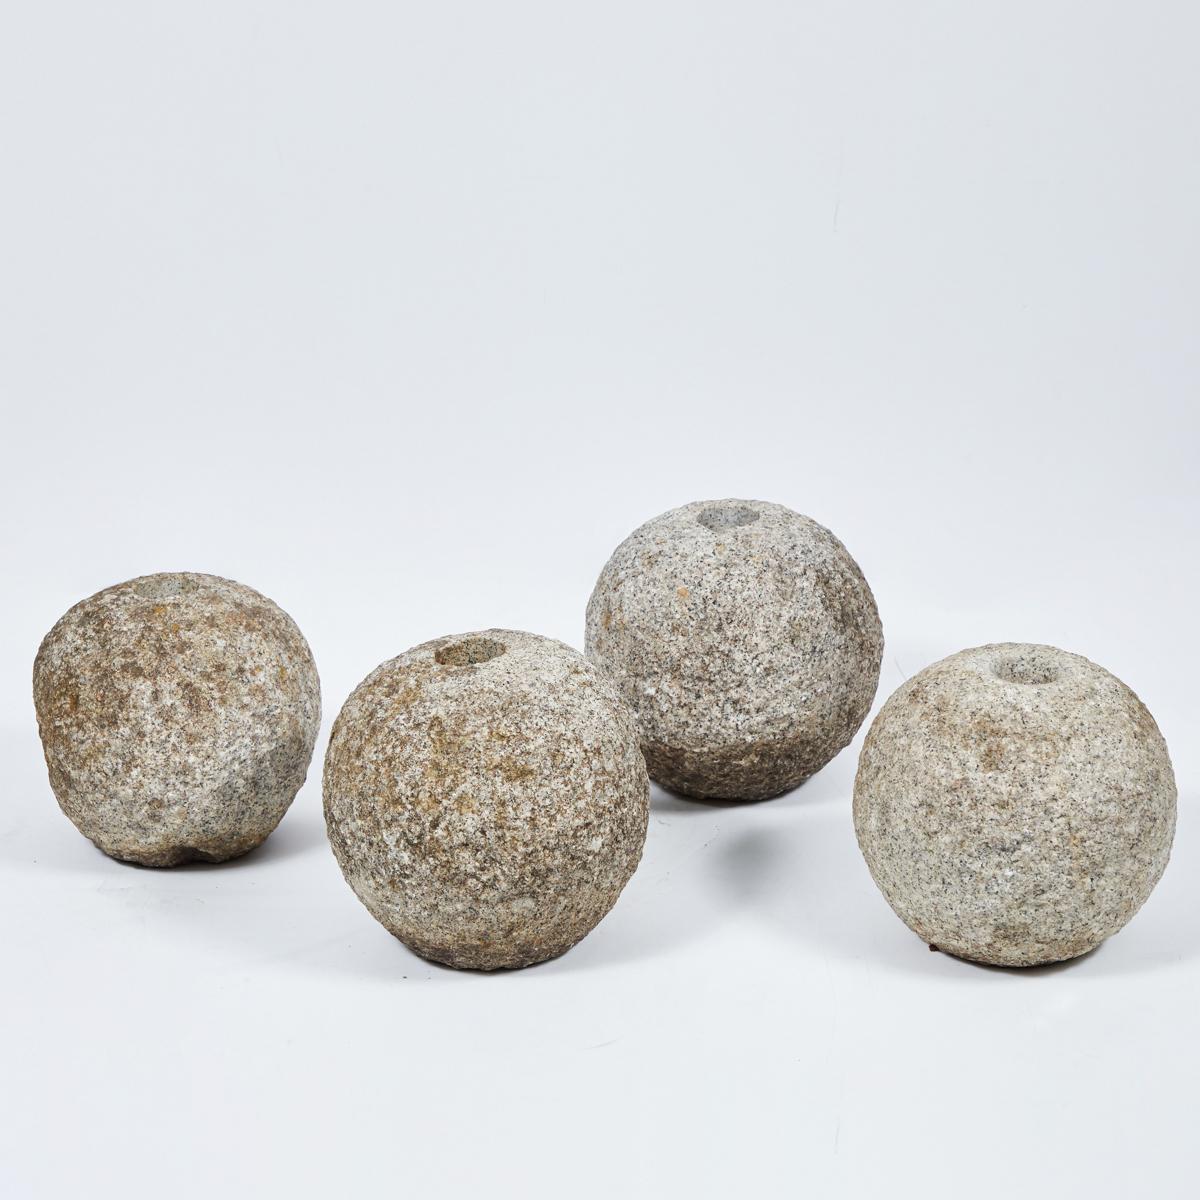 A set of four stone balls, originating in England, circa 1900.